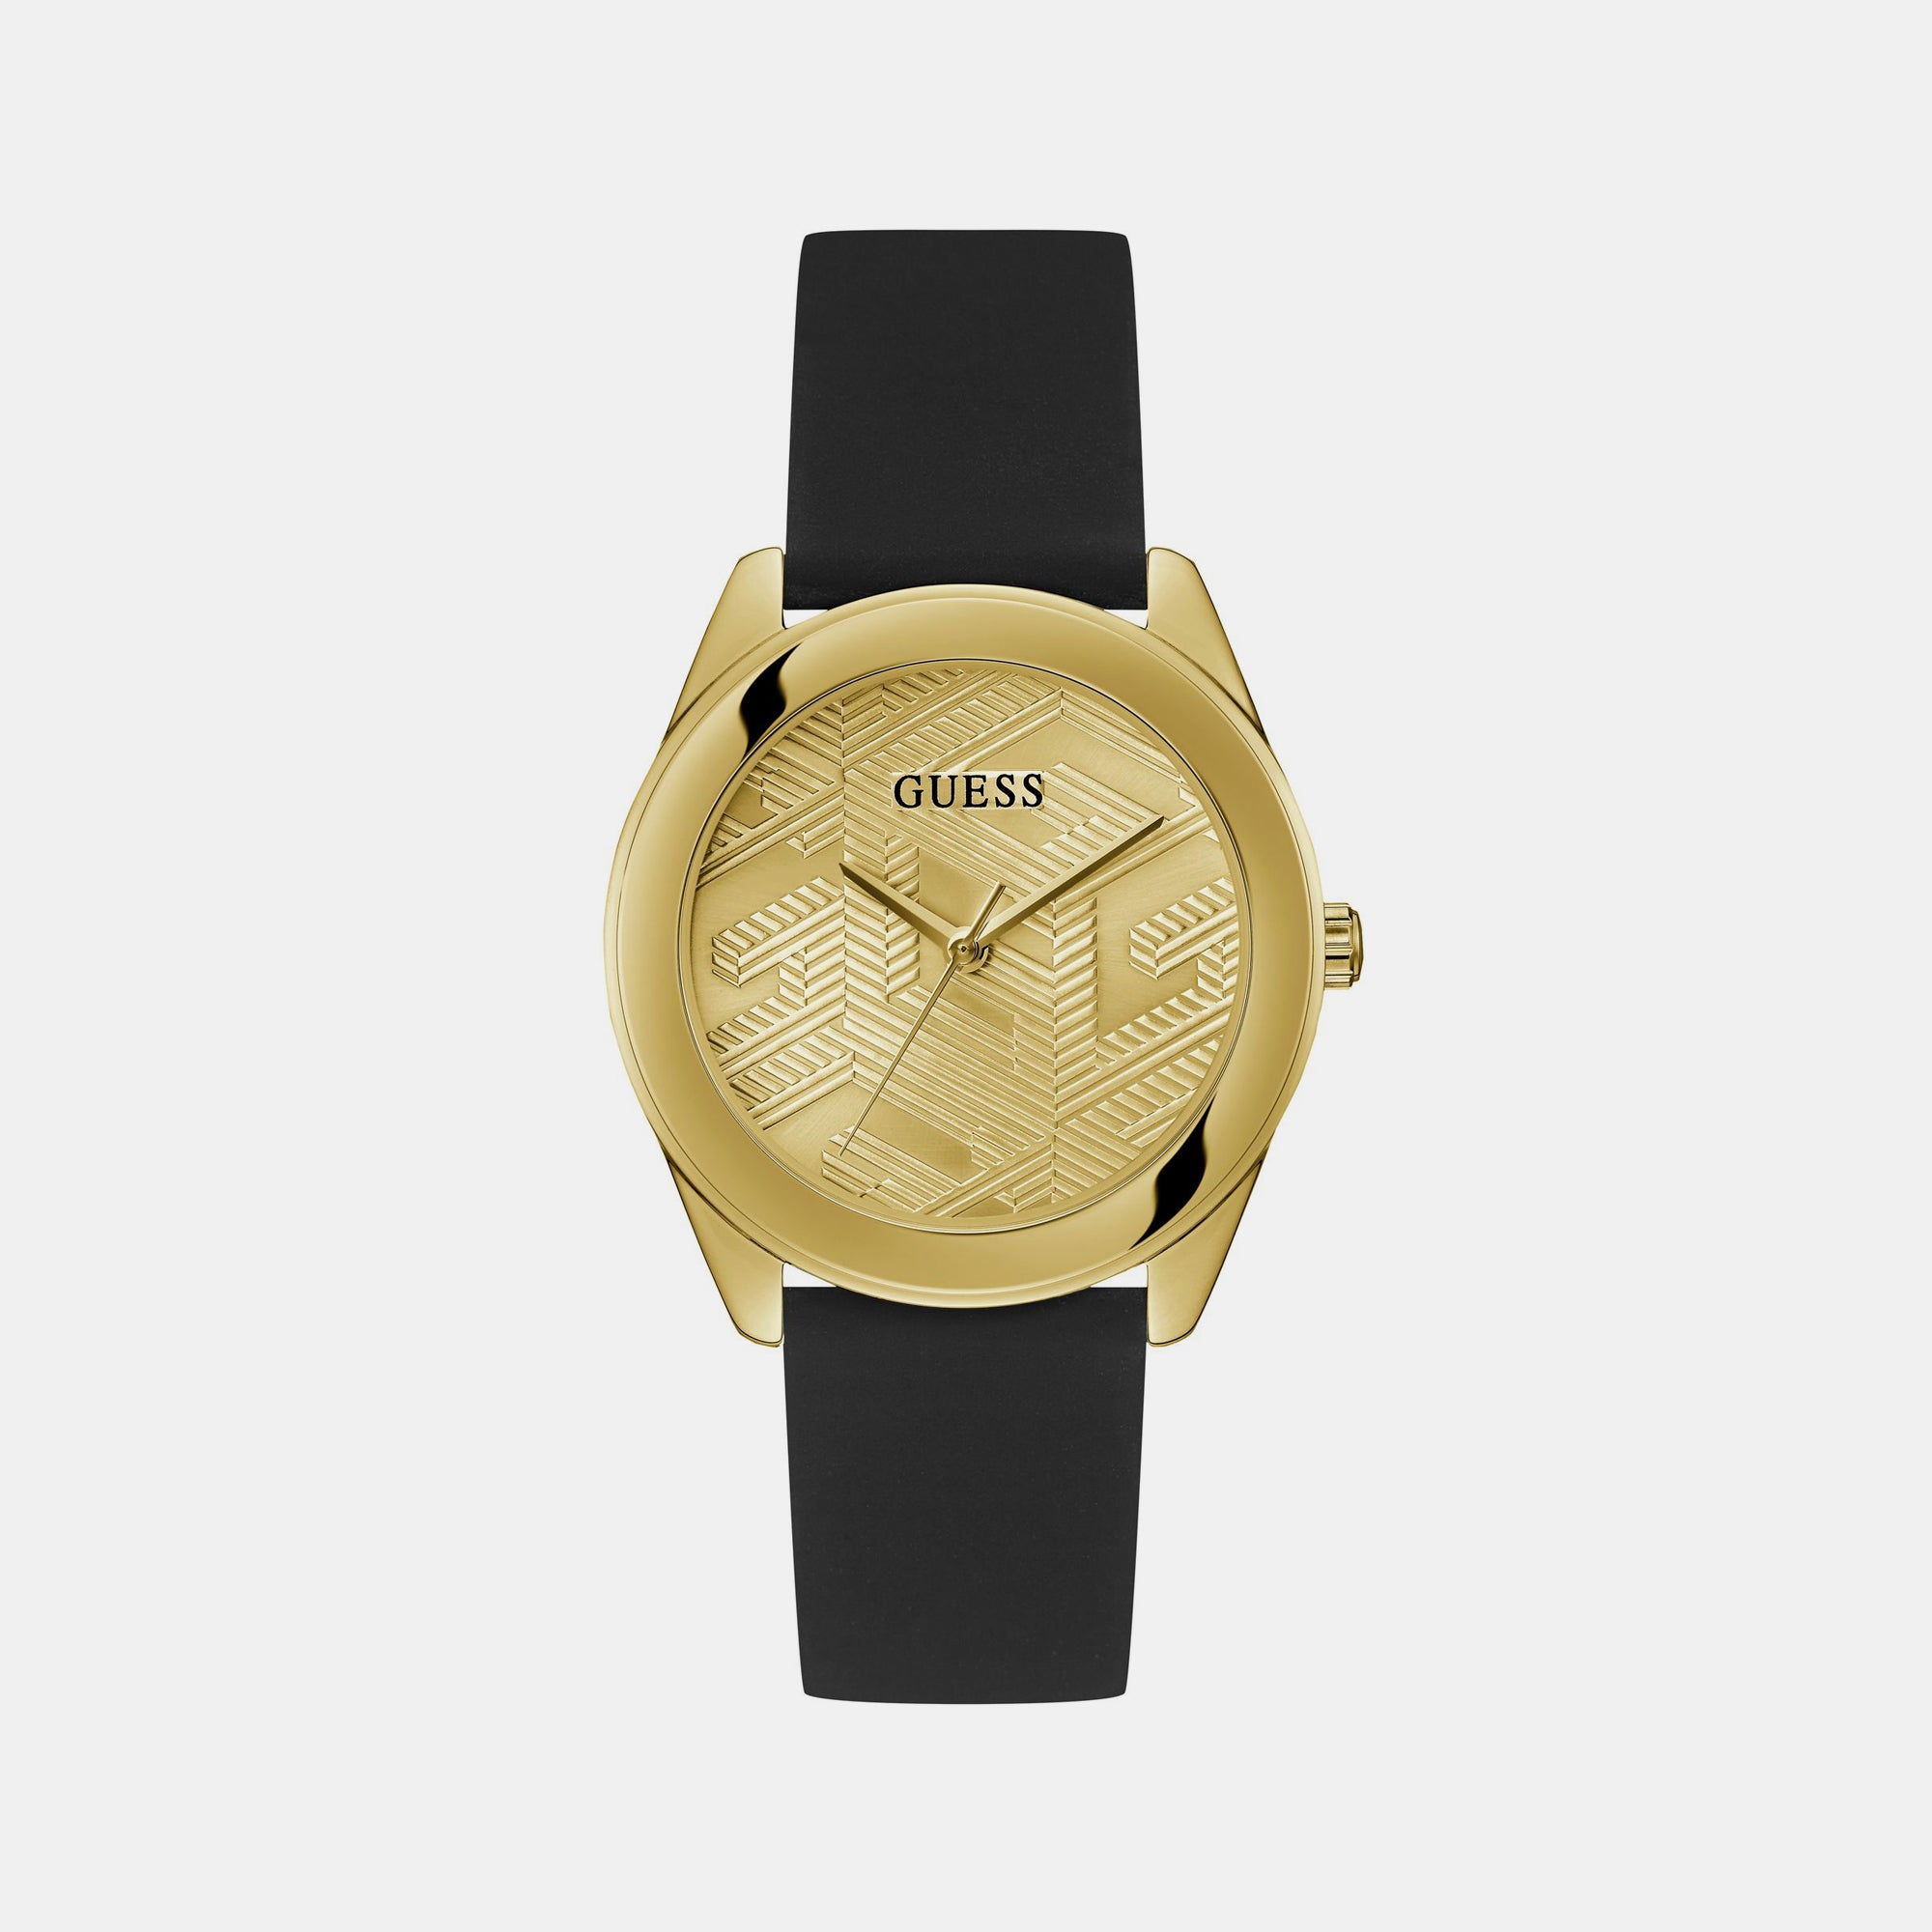 Attention Wrist watch : Amazon.in: Fashion